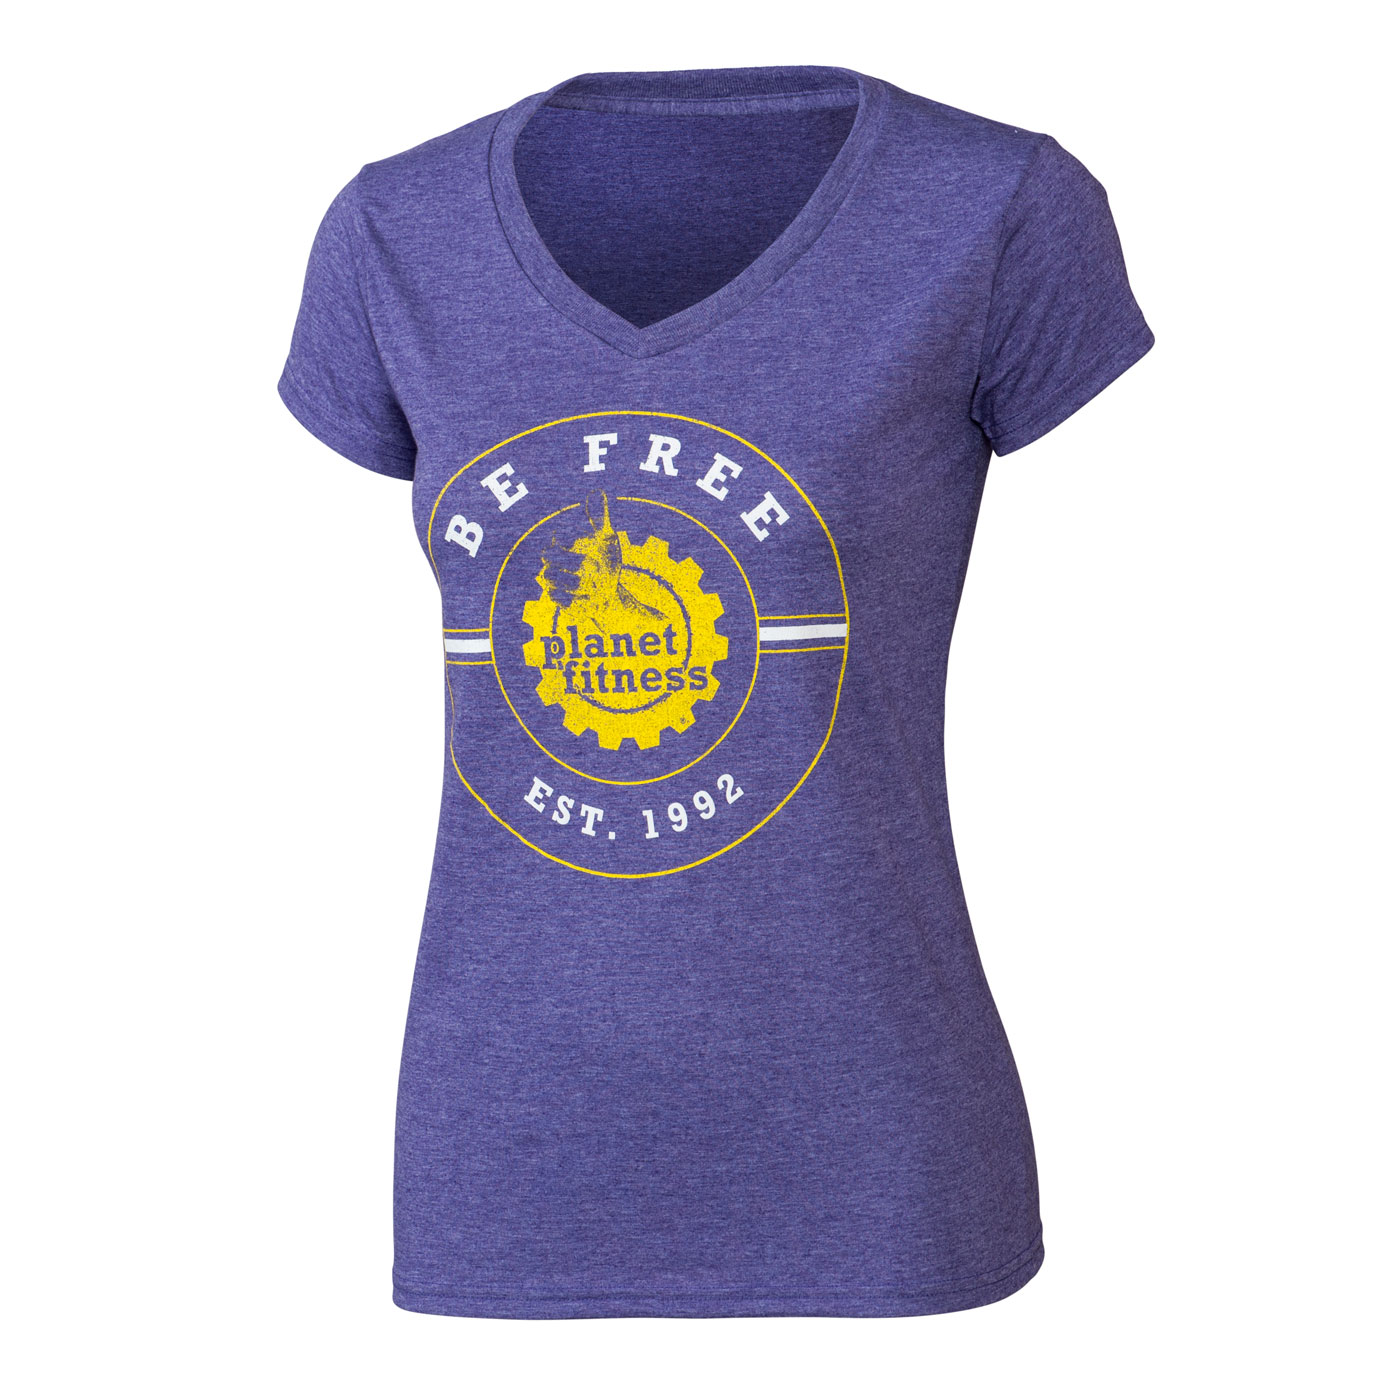 Women T-shirts Planet fitness - Free shipping